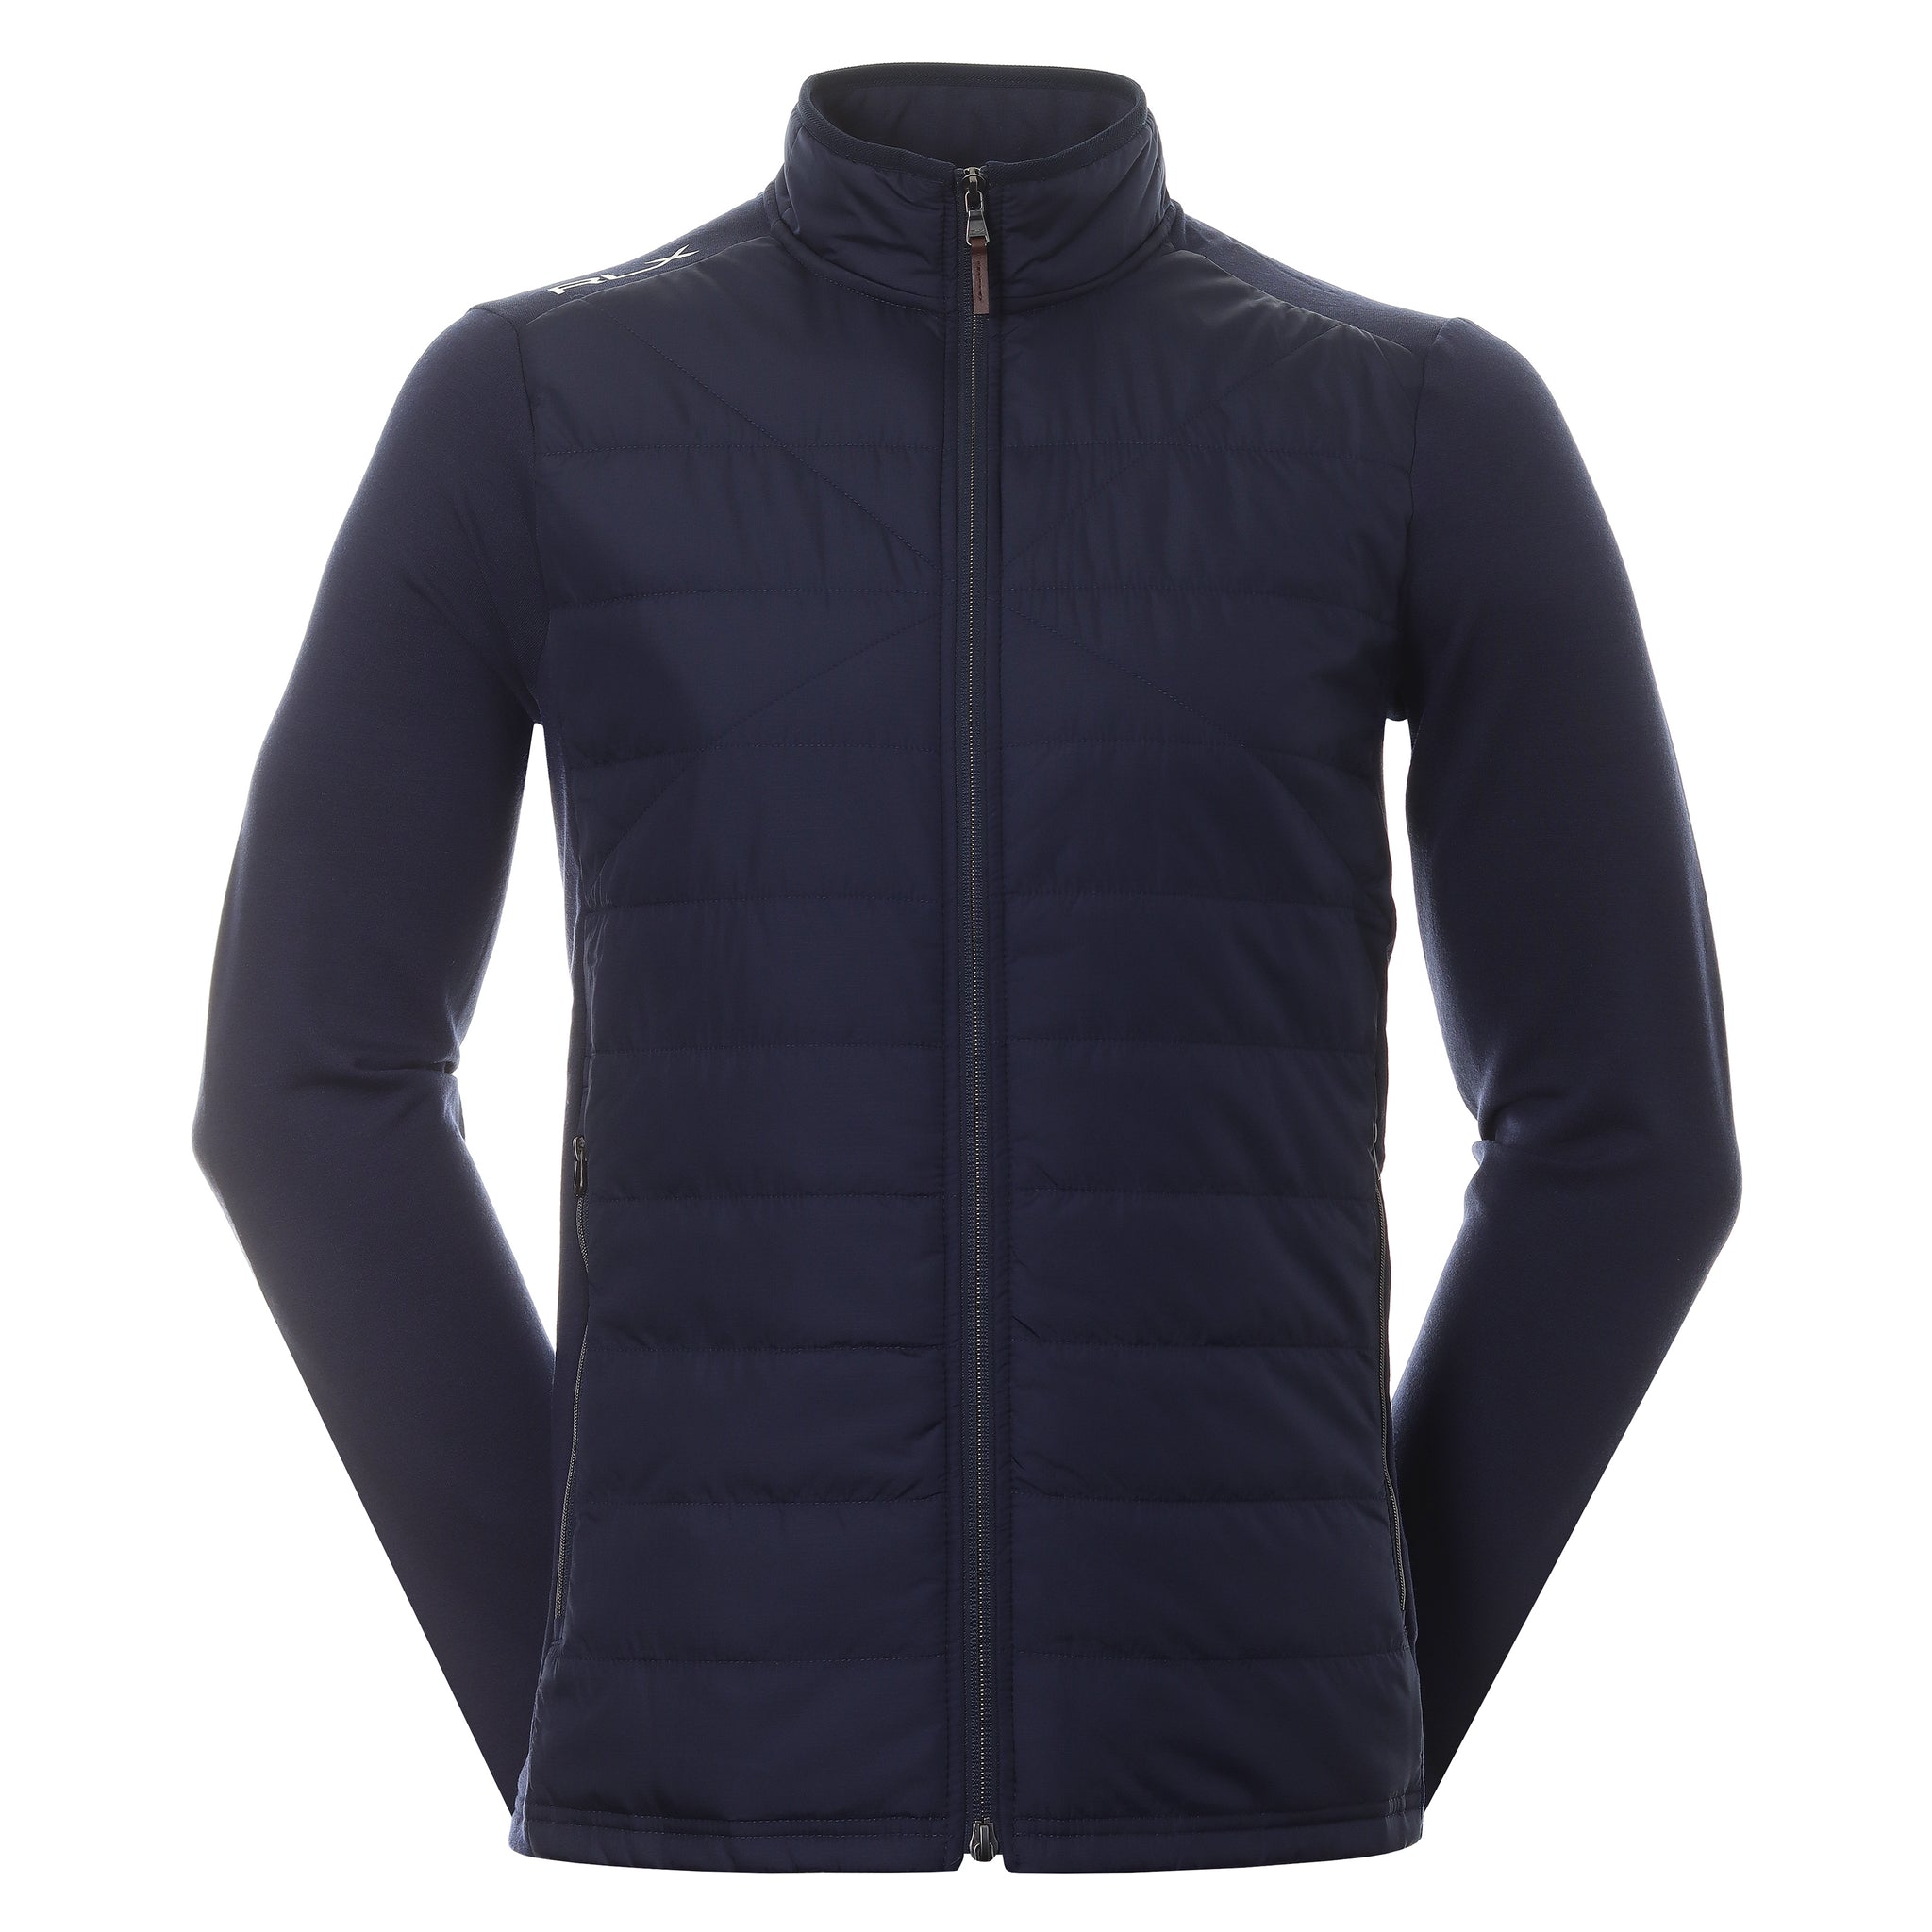 rlx-ralph-lauren-full-zip-hybrid-jacket-785899282-french-navy-001